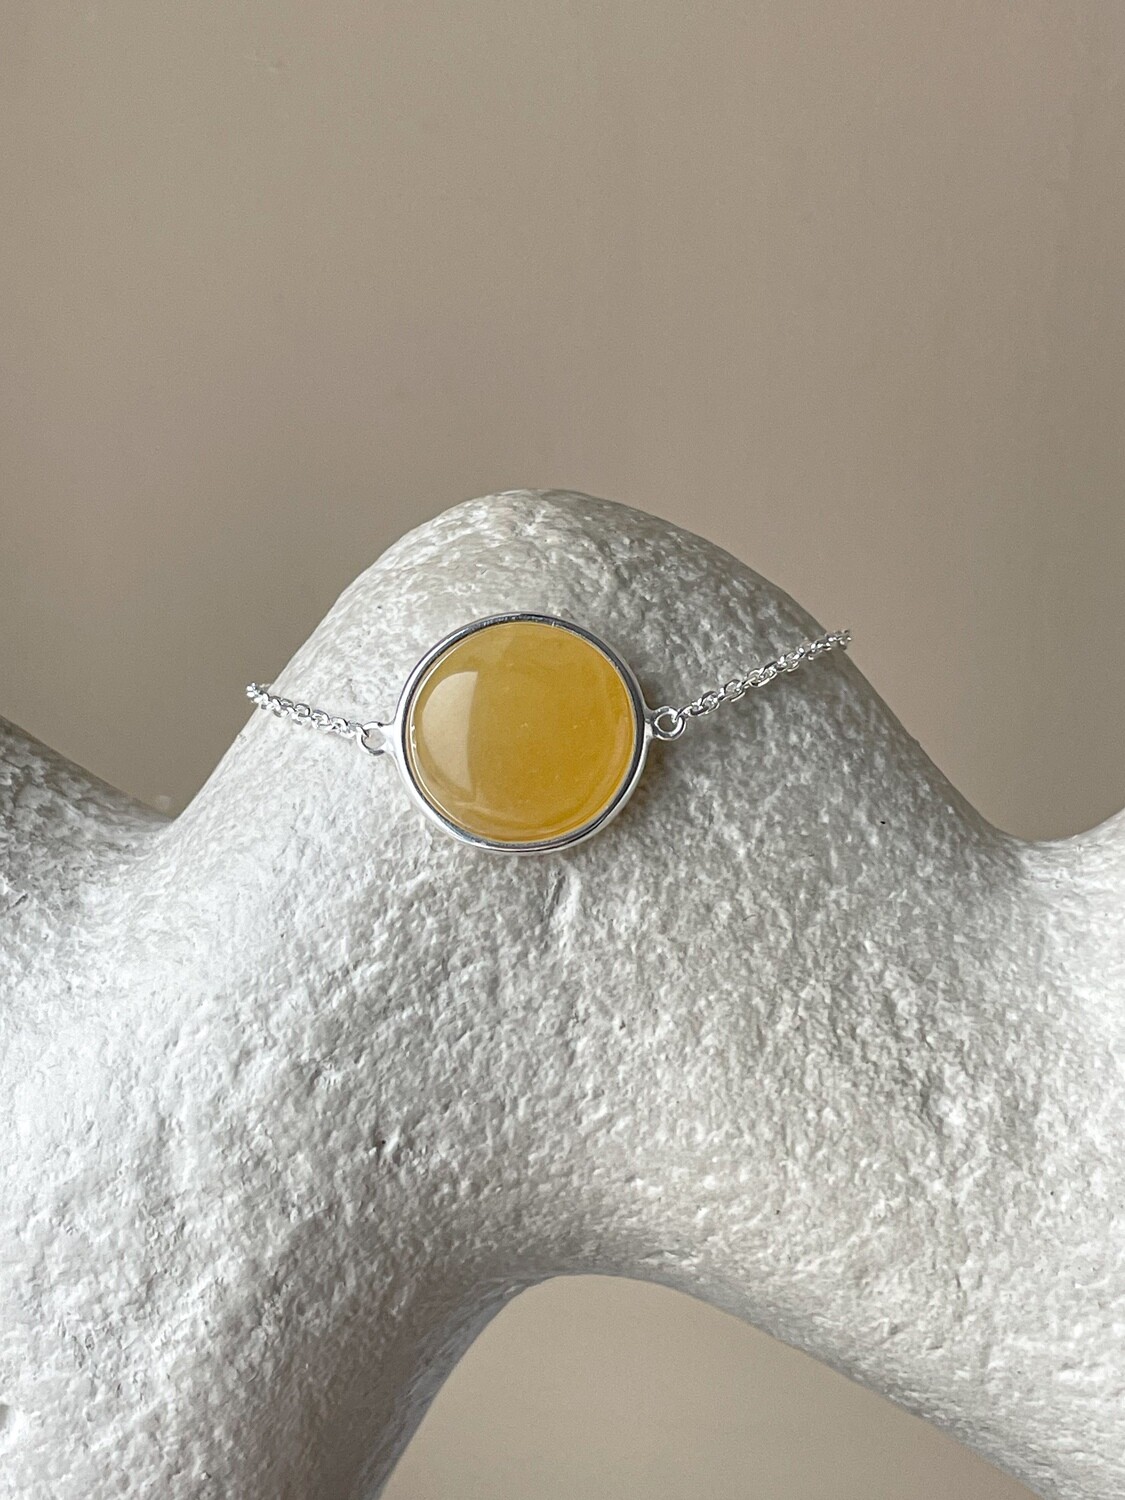 Браслет на цепочке с медовым янтарем, размер 16,5-18,5